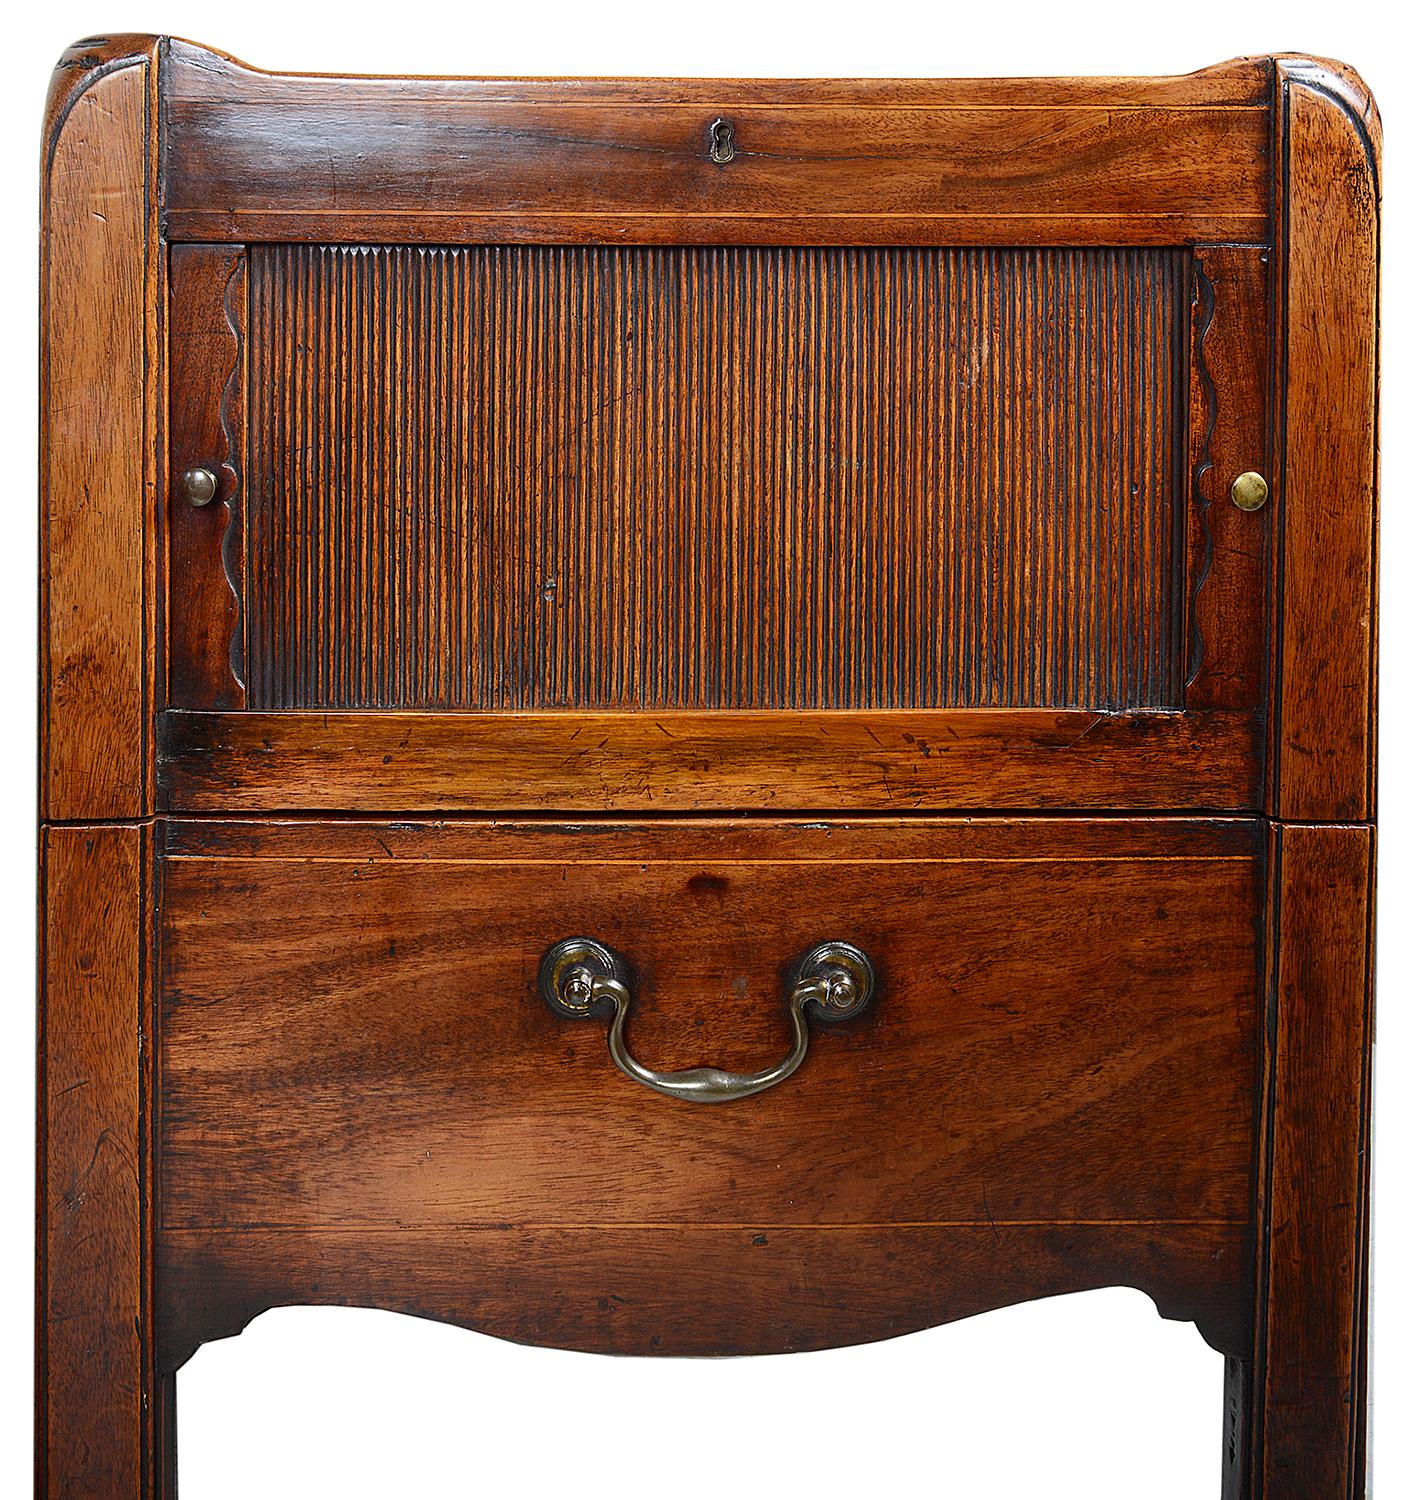 English Pair of Georgian Period Mahogany Bedside Cabinets, circa 1780